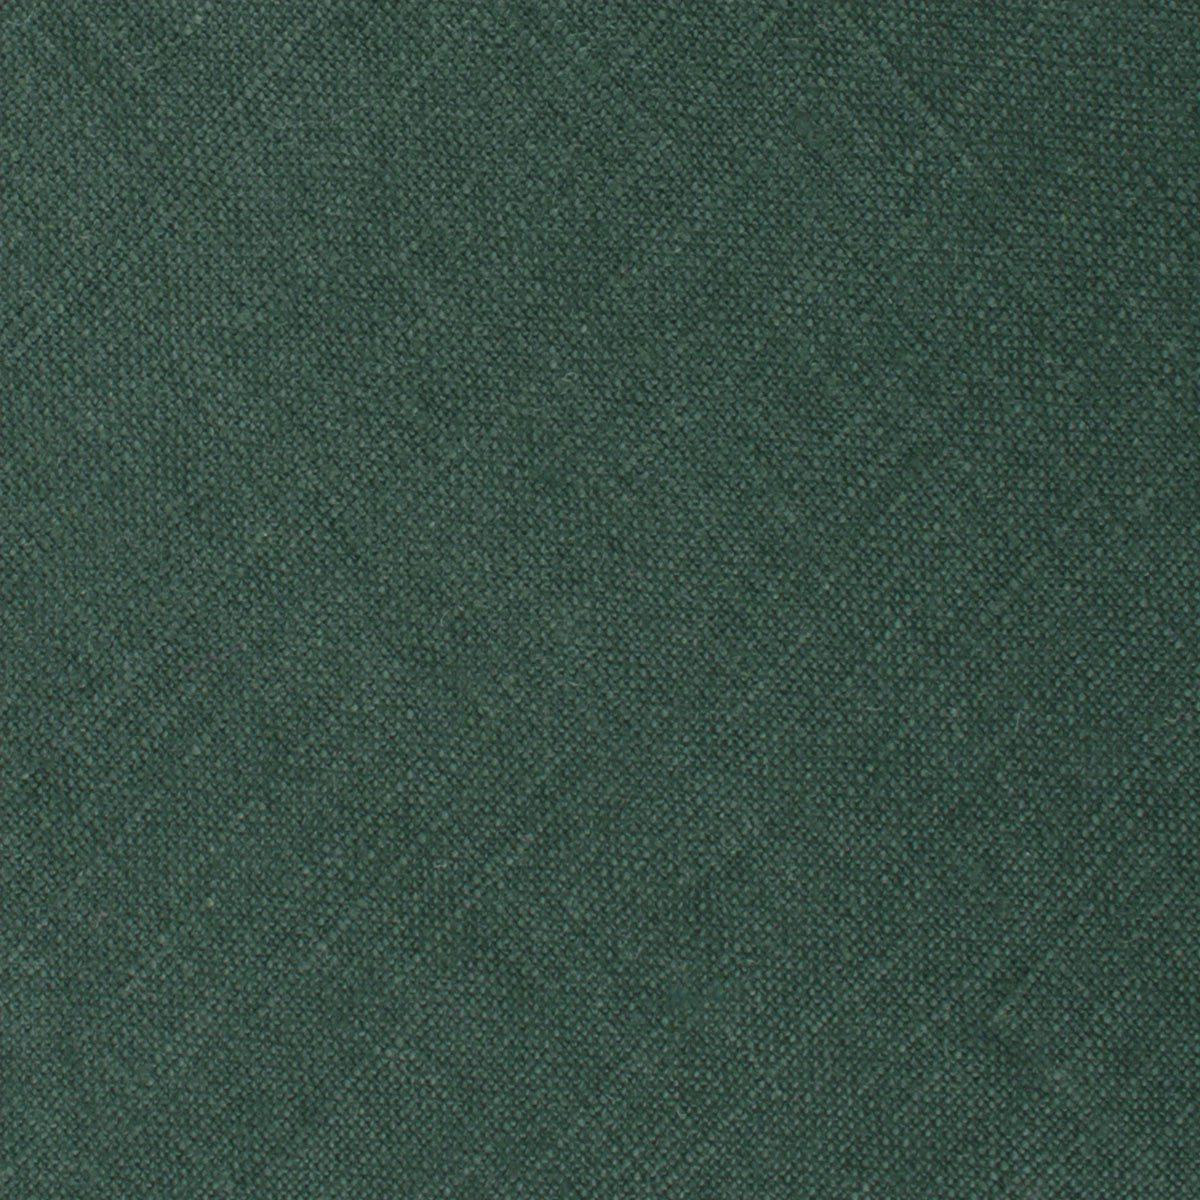 Dusty Emerald Green Linen Pocket Square Fabric